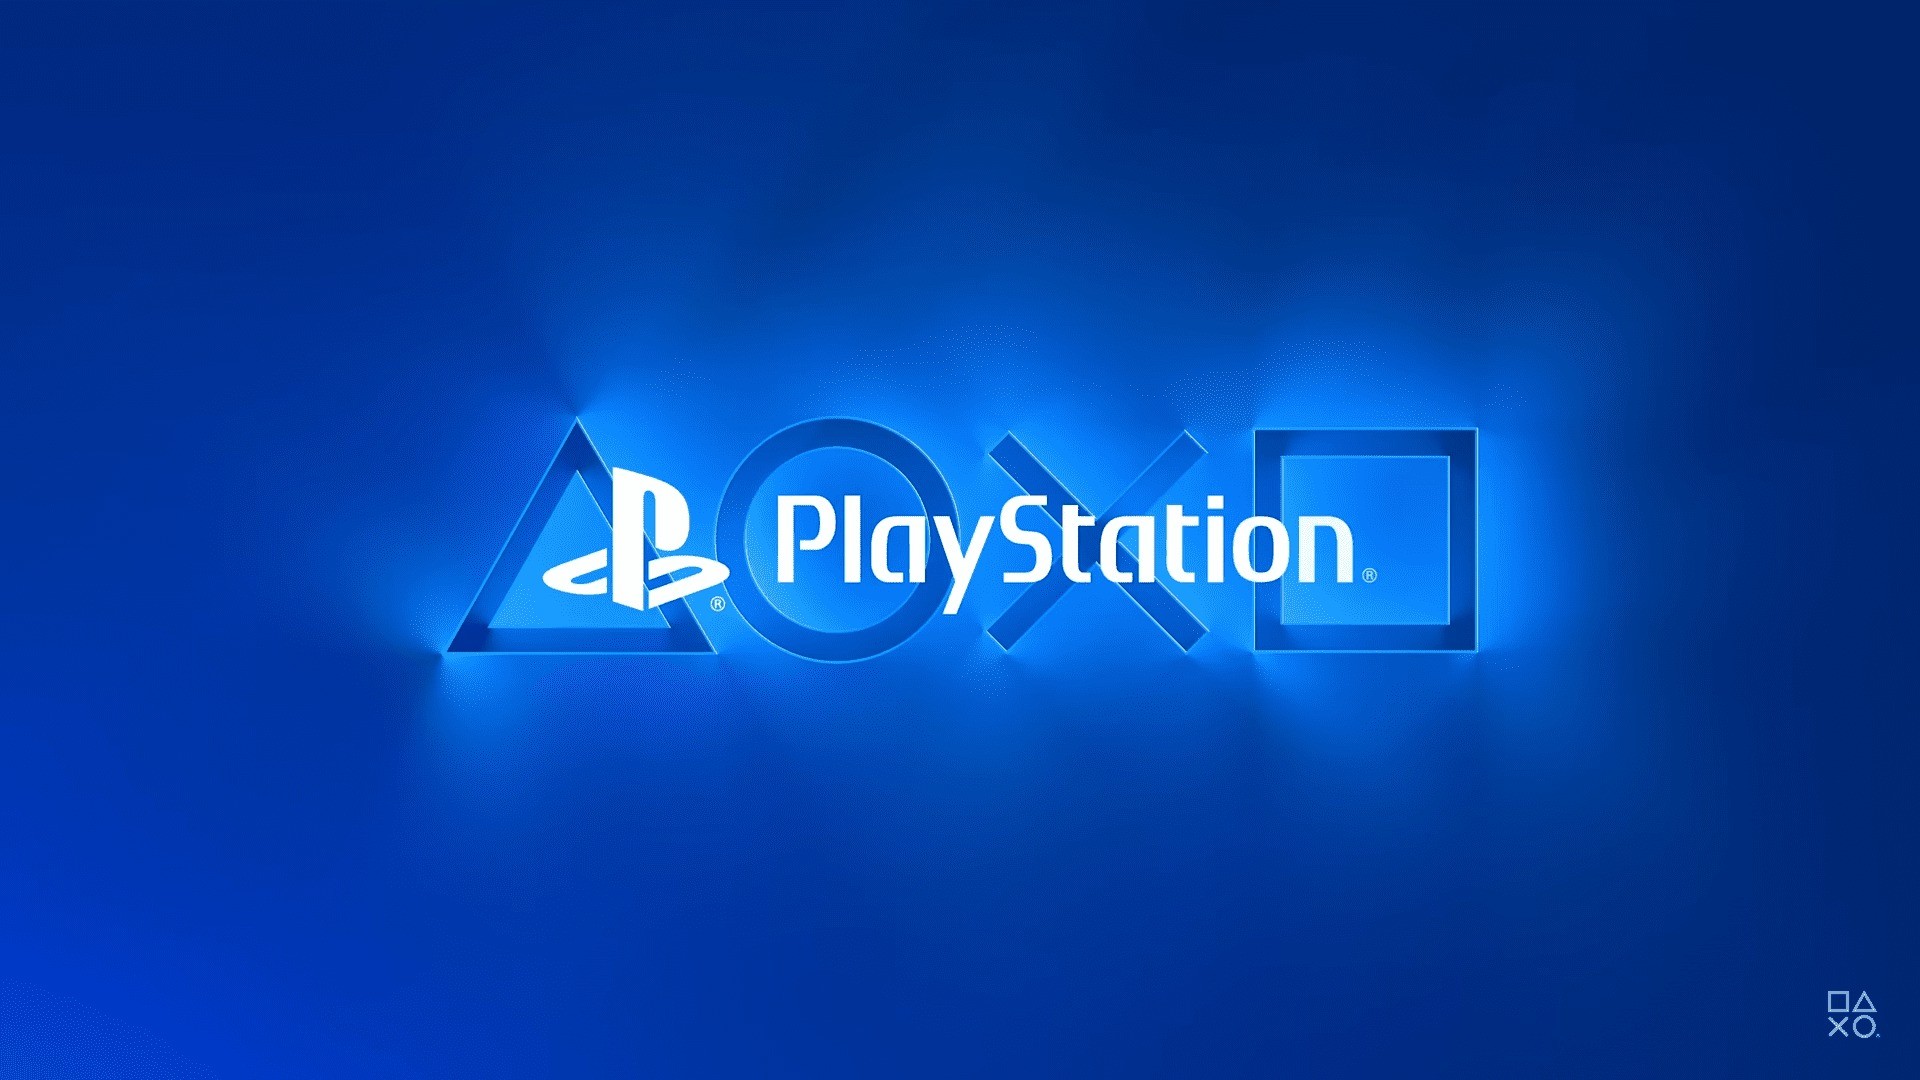 PlayStation anuncia evento State of Play para esta quinta-feira